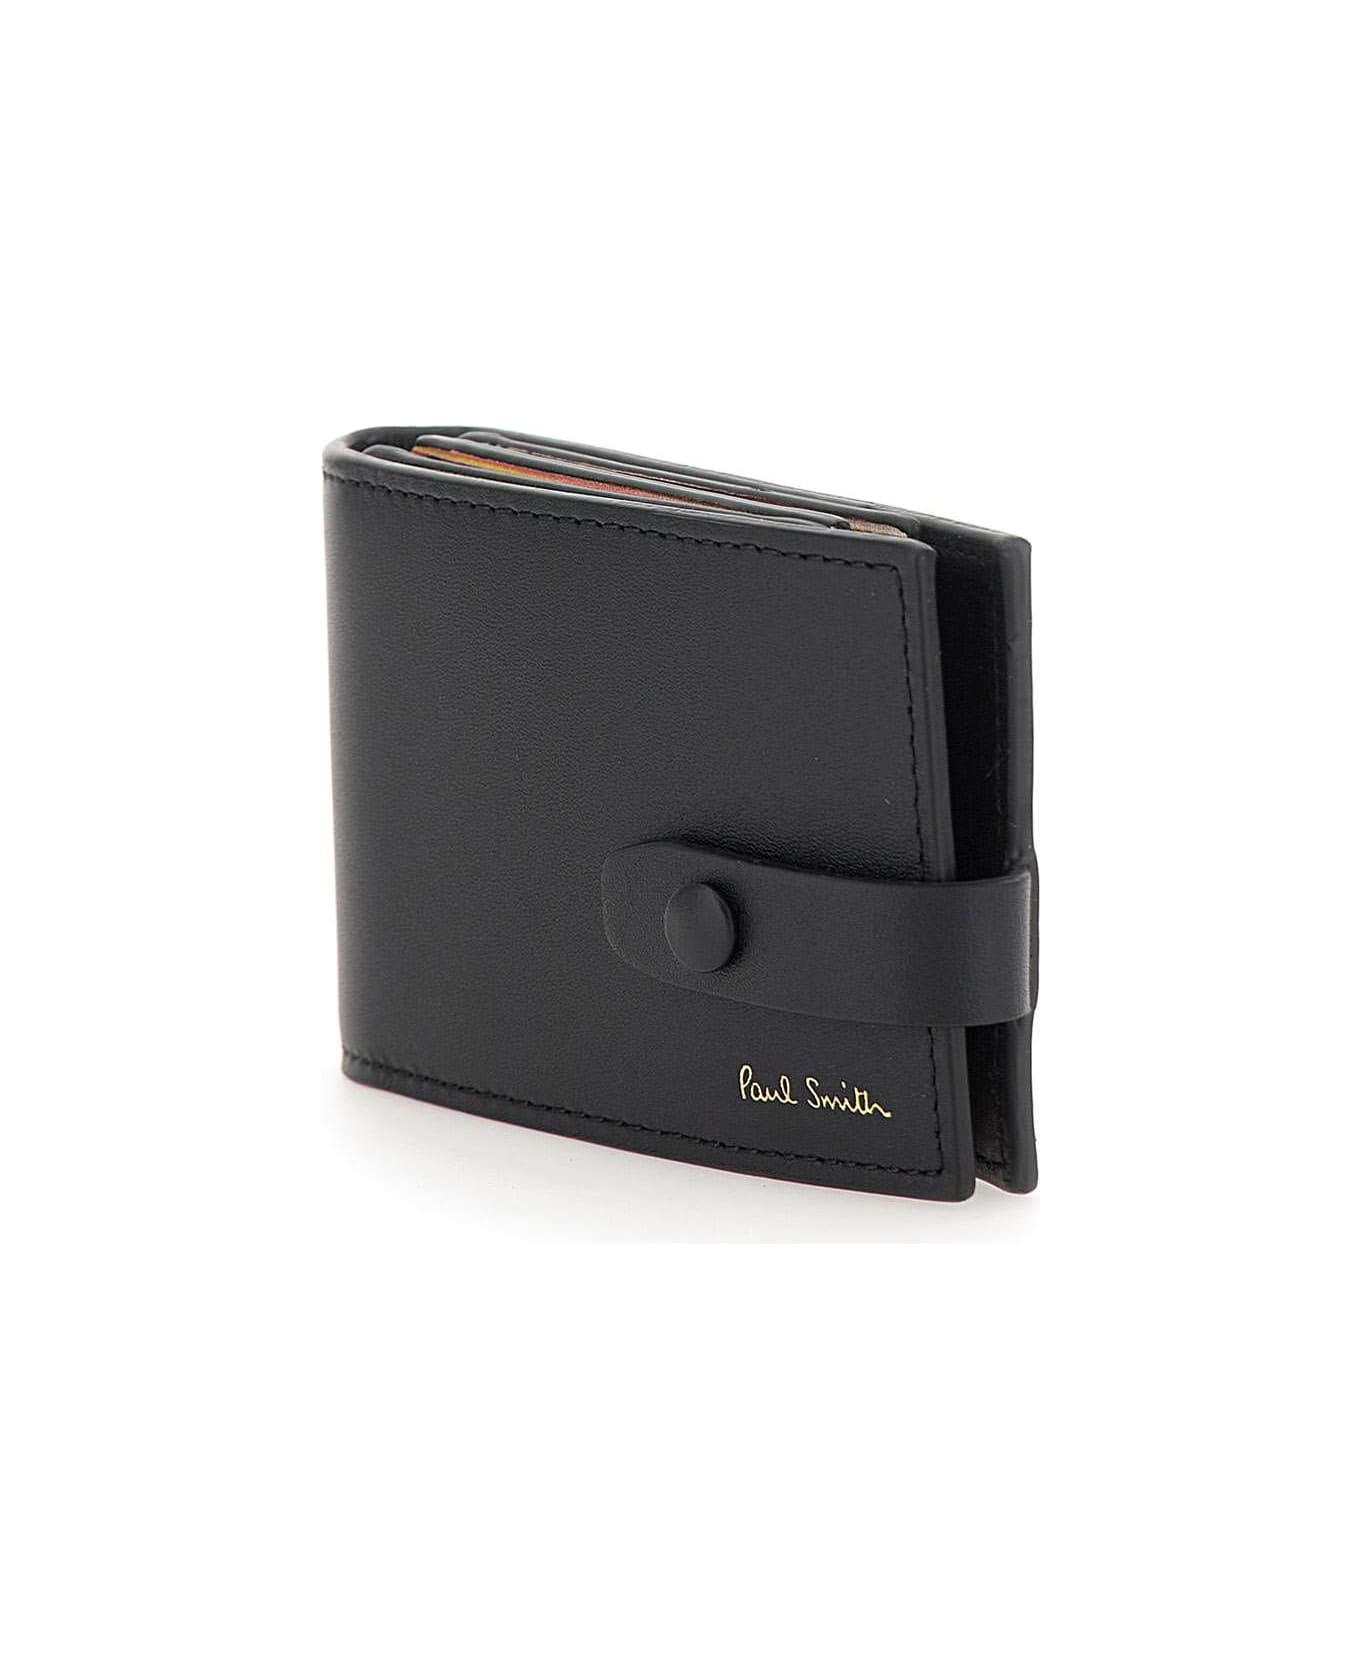 Paul Smith Leather Card Holder - BLACK